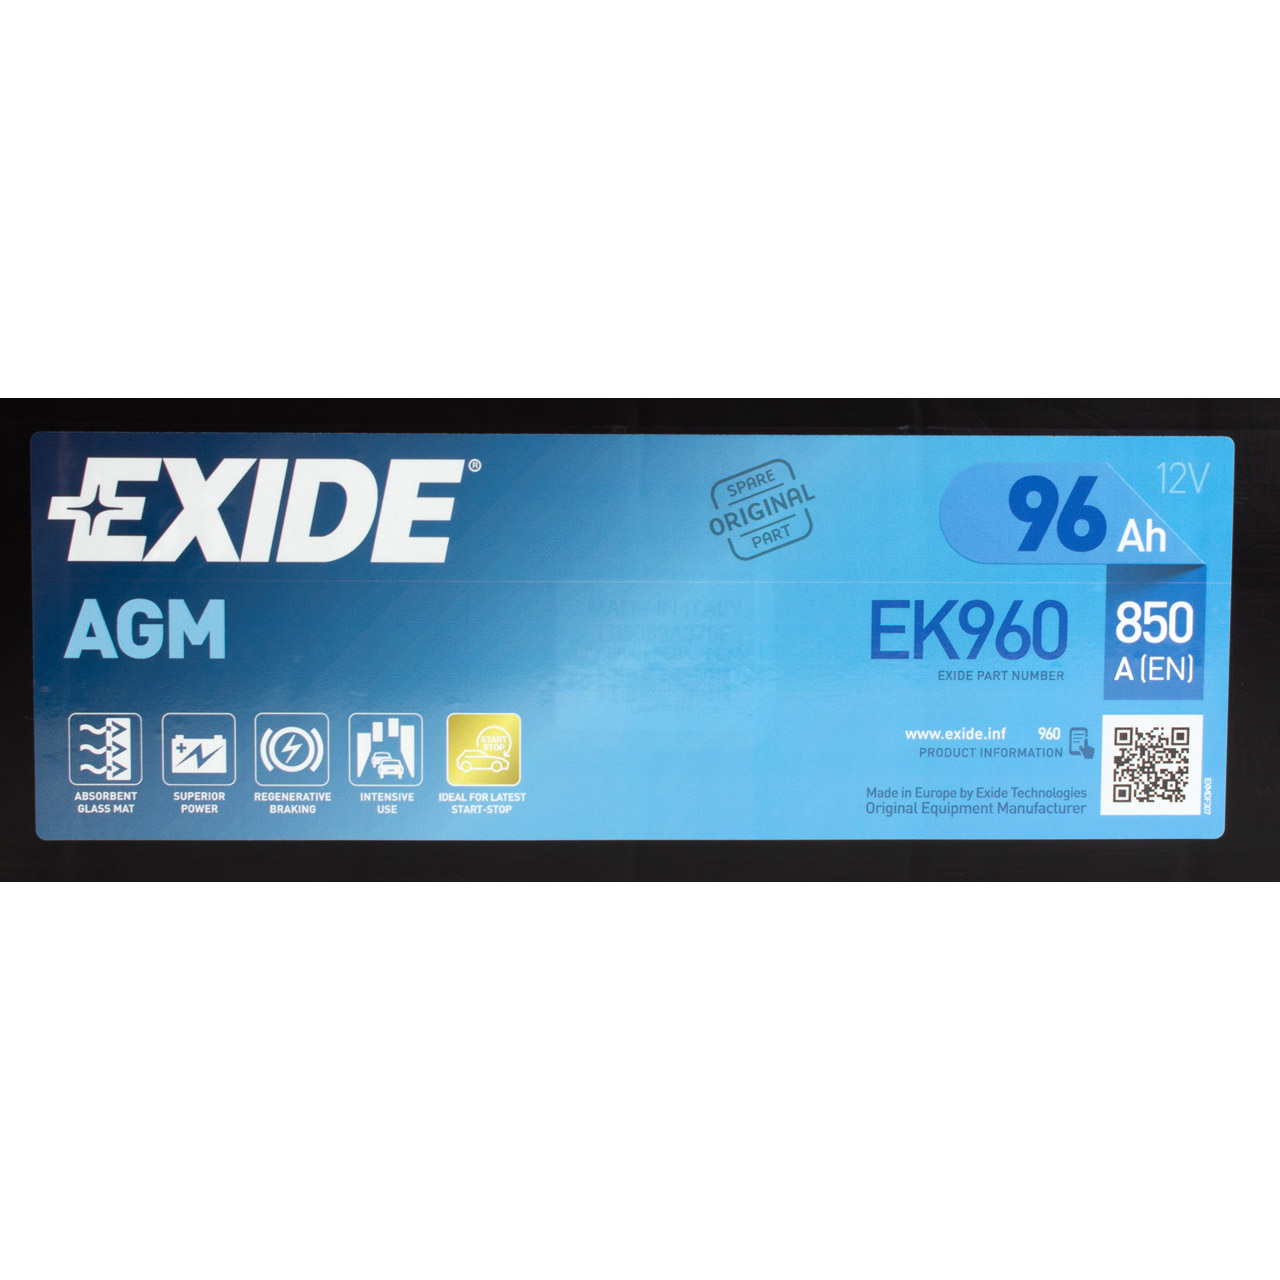 Exide EK960 Start-Stop AGM 12 V 96 Ah 850 A (EN), 169,00 €